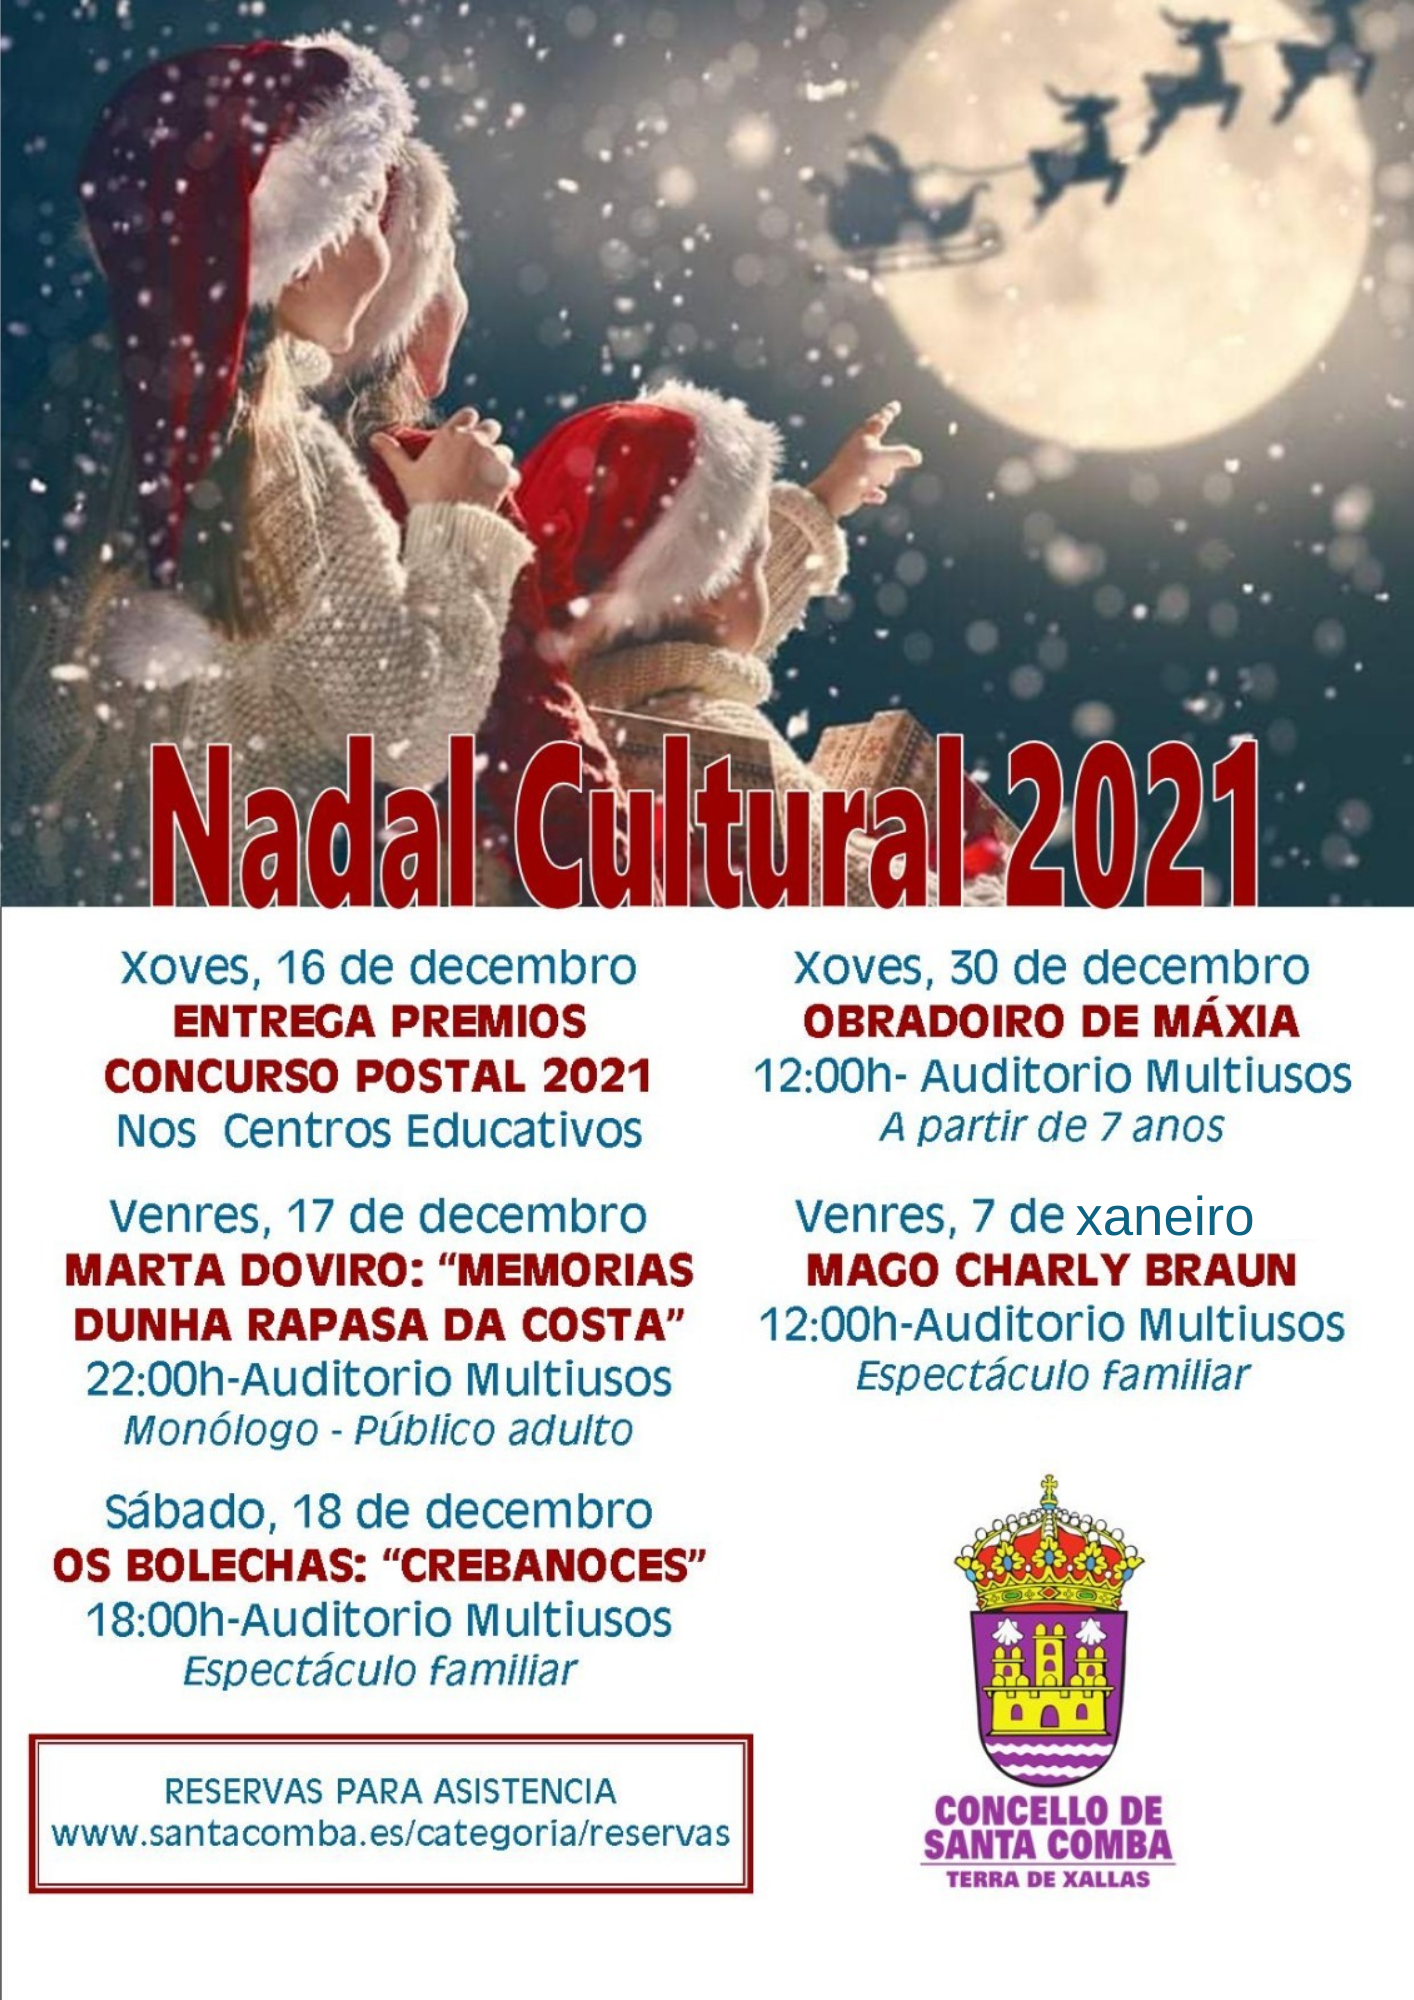 Nadal Cultural 2021